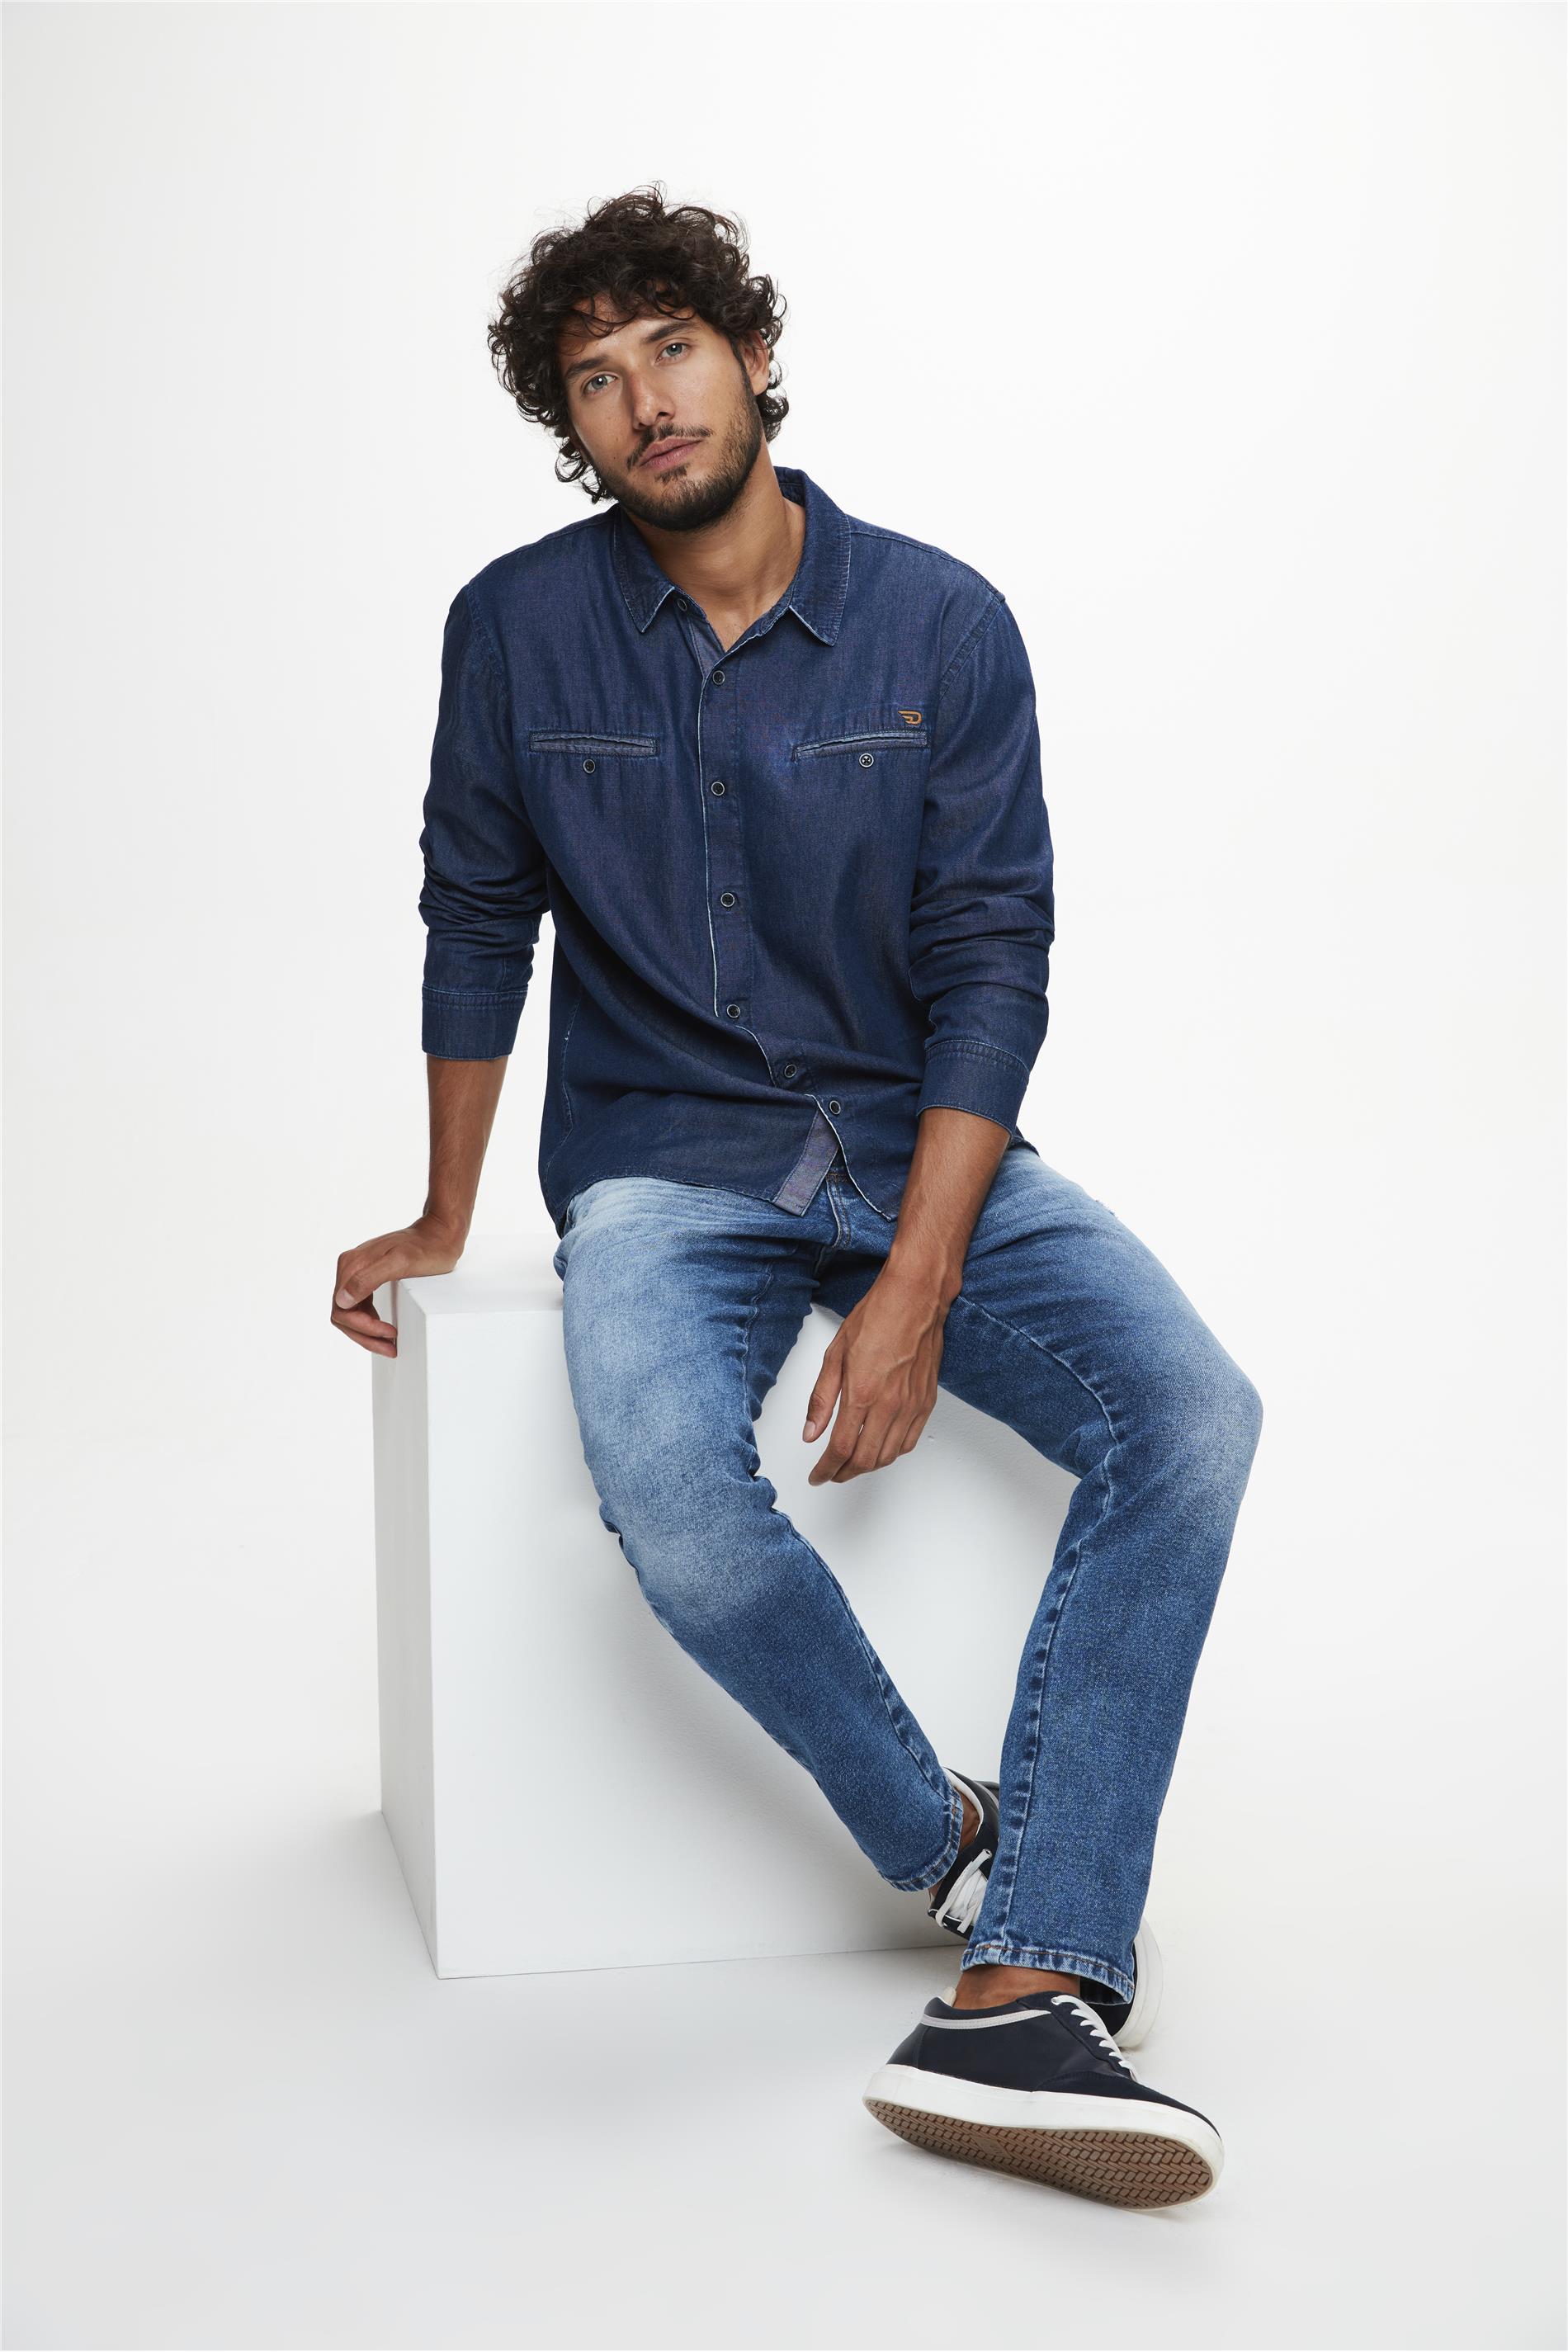 Foto: É trendy: camisa jeans + caça jeans + bolsa metalizada - Purepeople